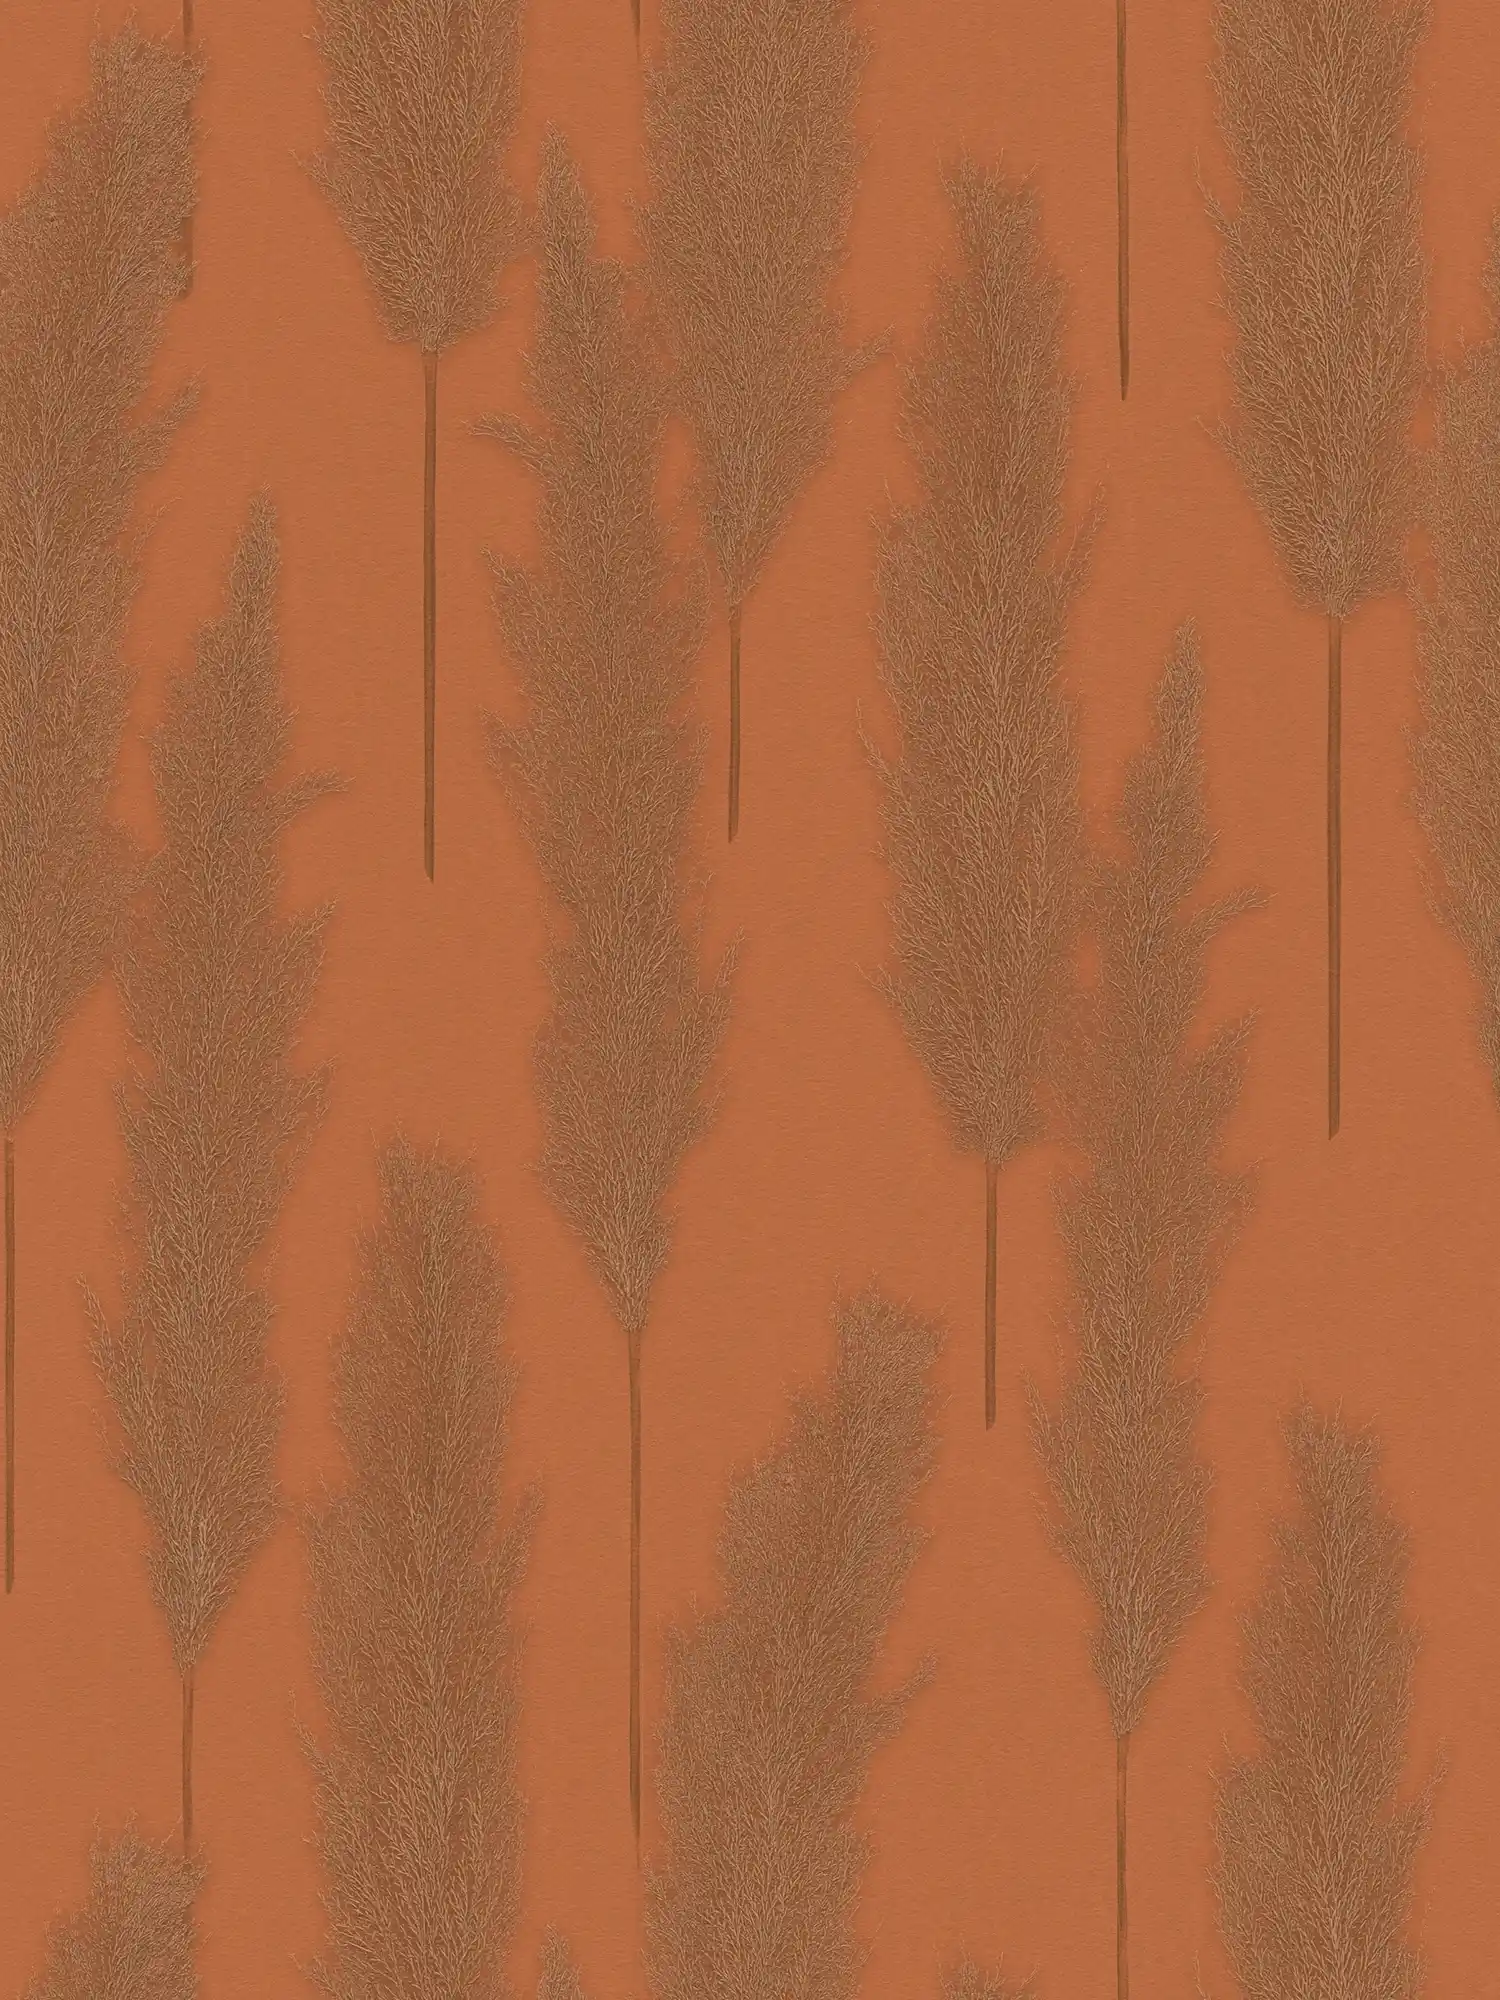 Nature wallpaper with pampas grass design - Brown, Metallic
